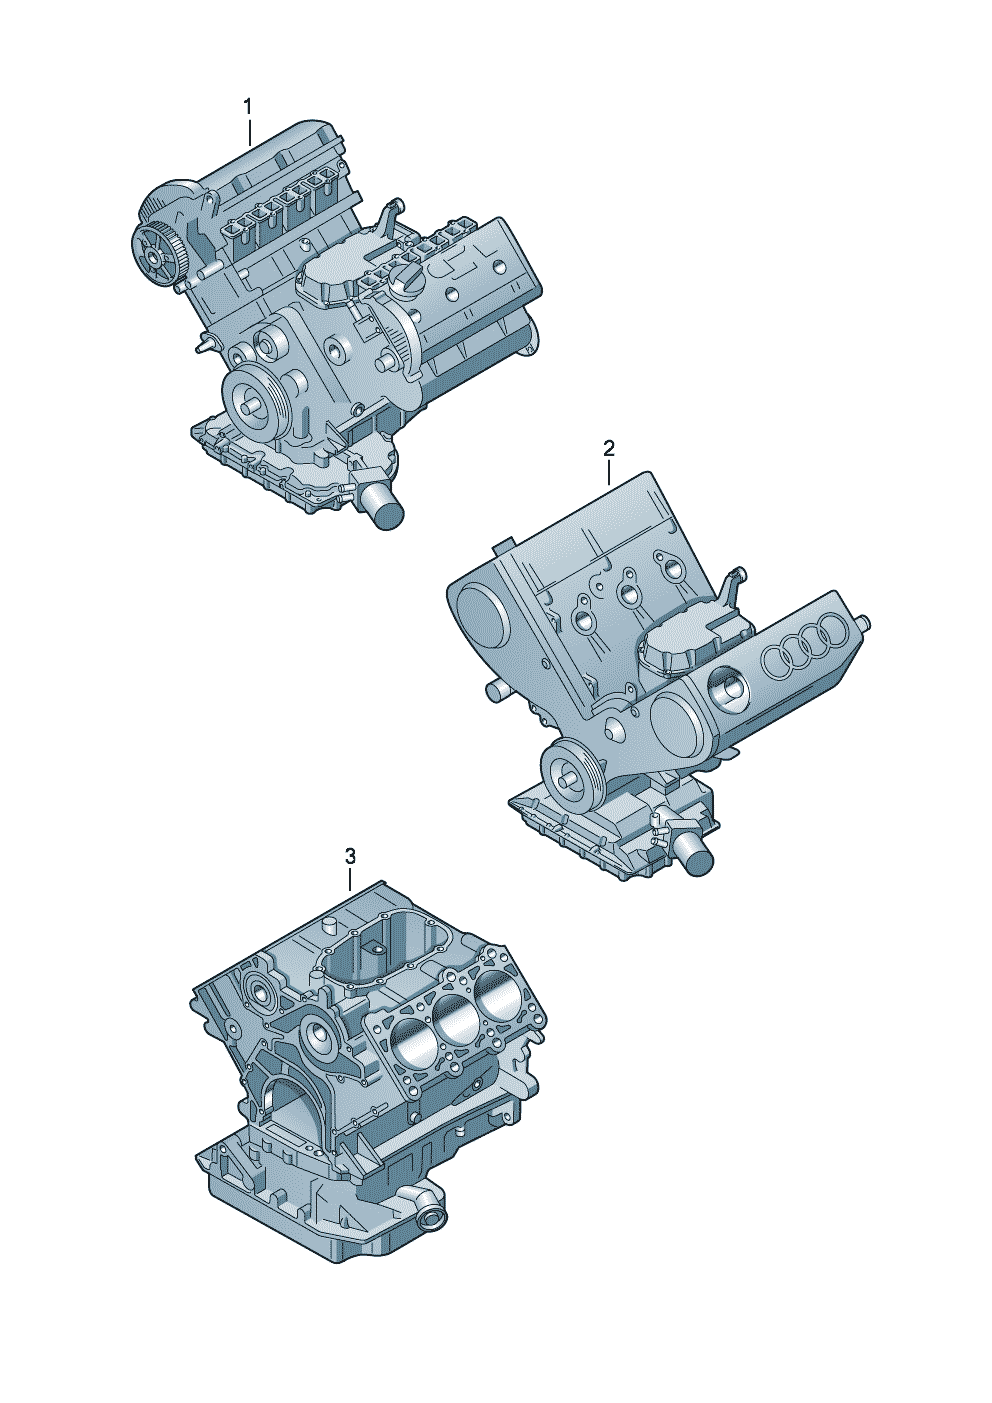 Base engine 3.0Ltr. - Audi A8/S8 quattro - a8q